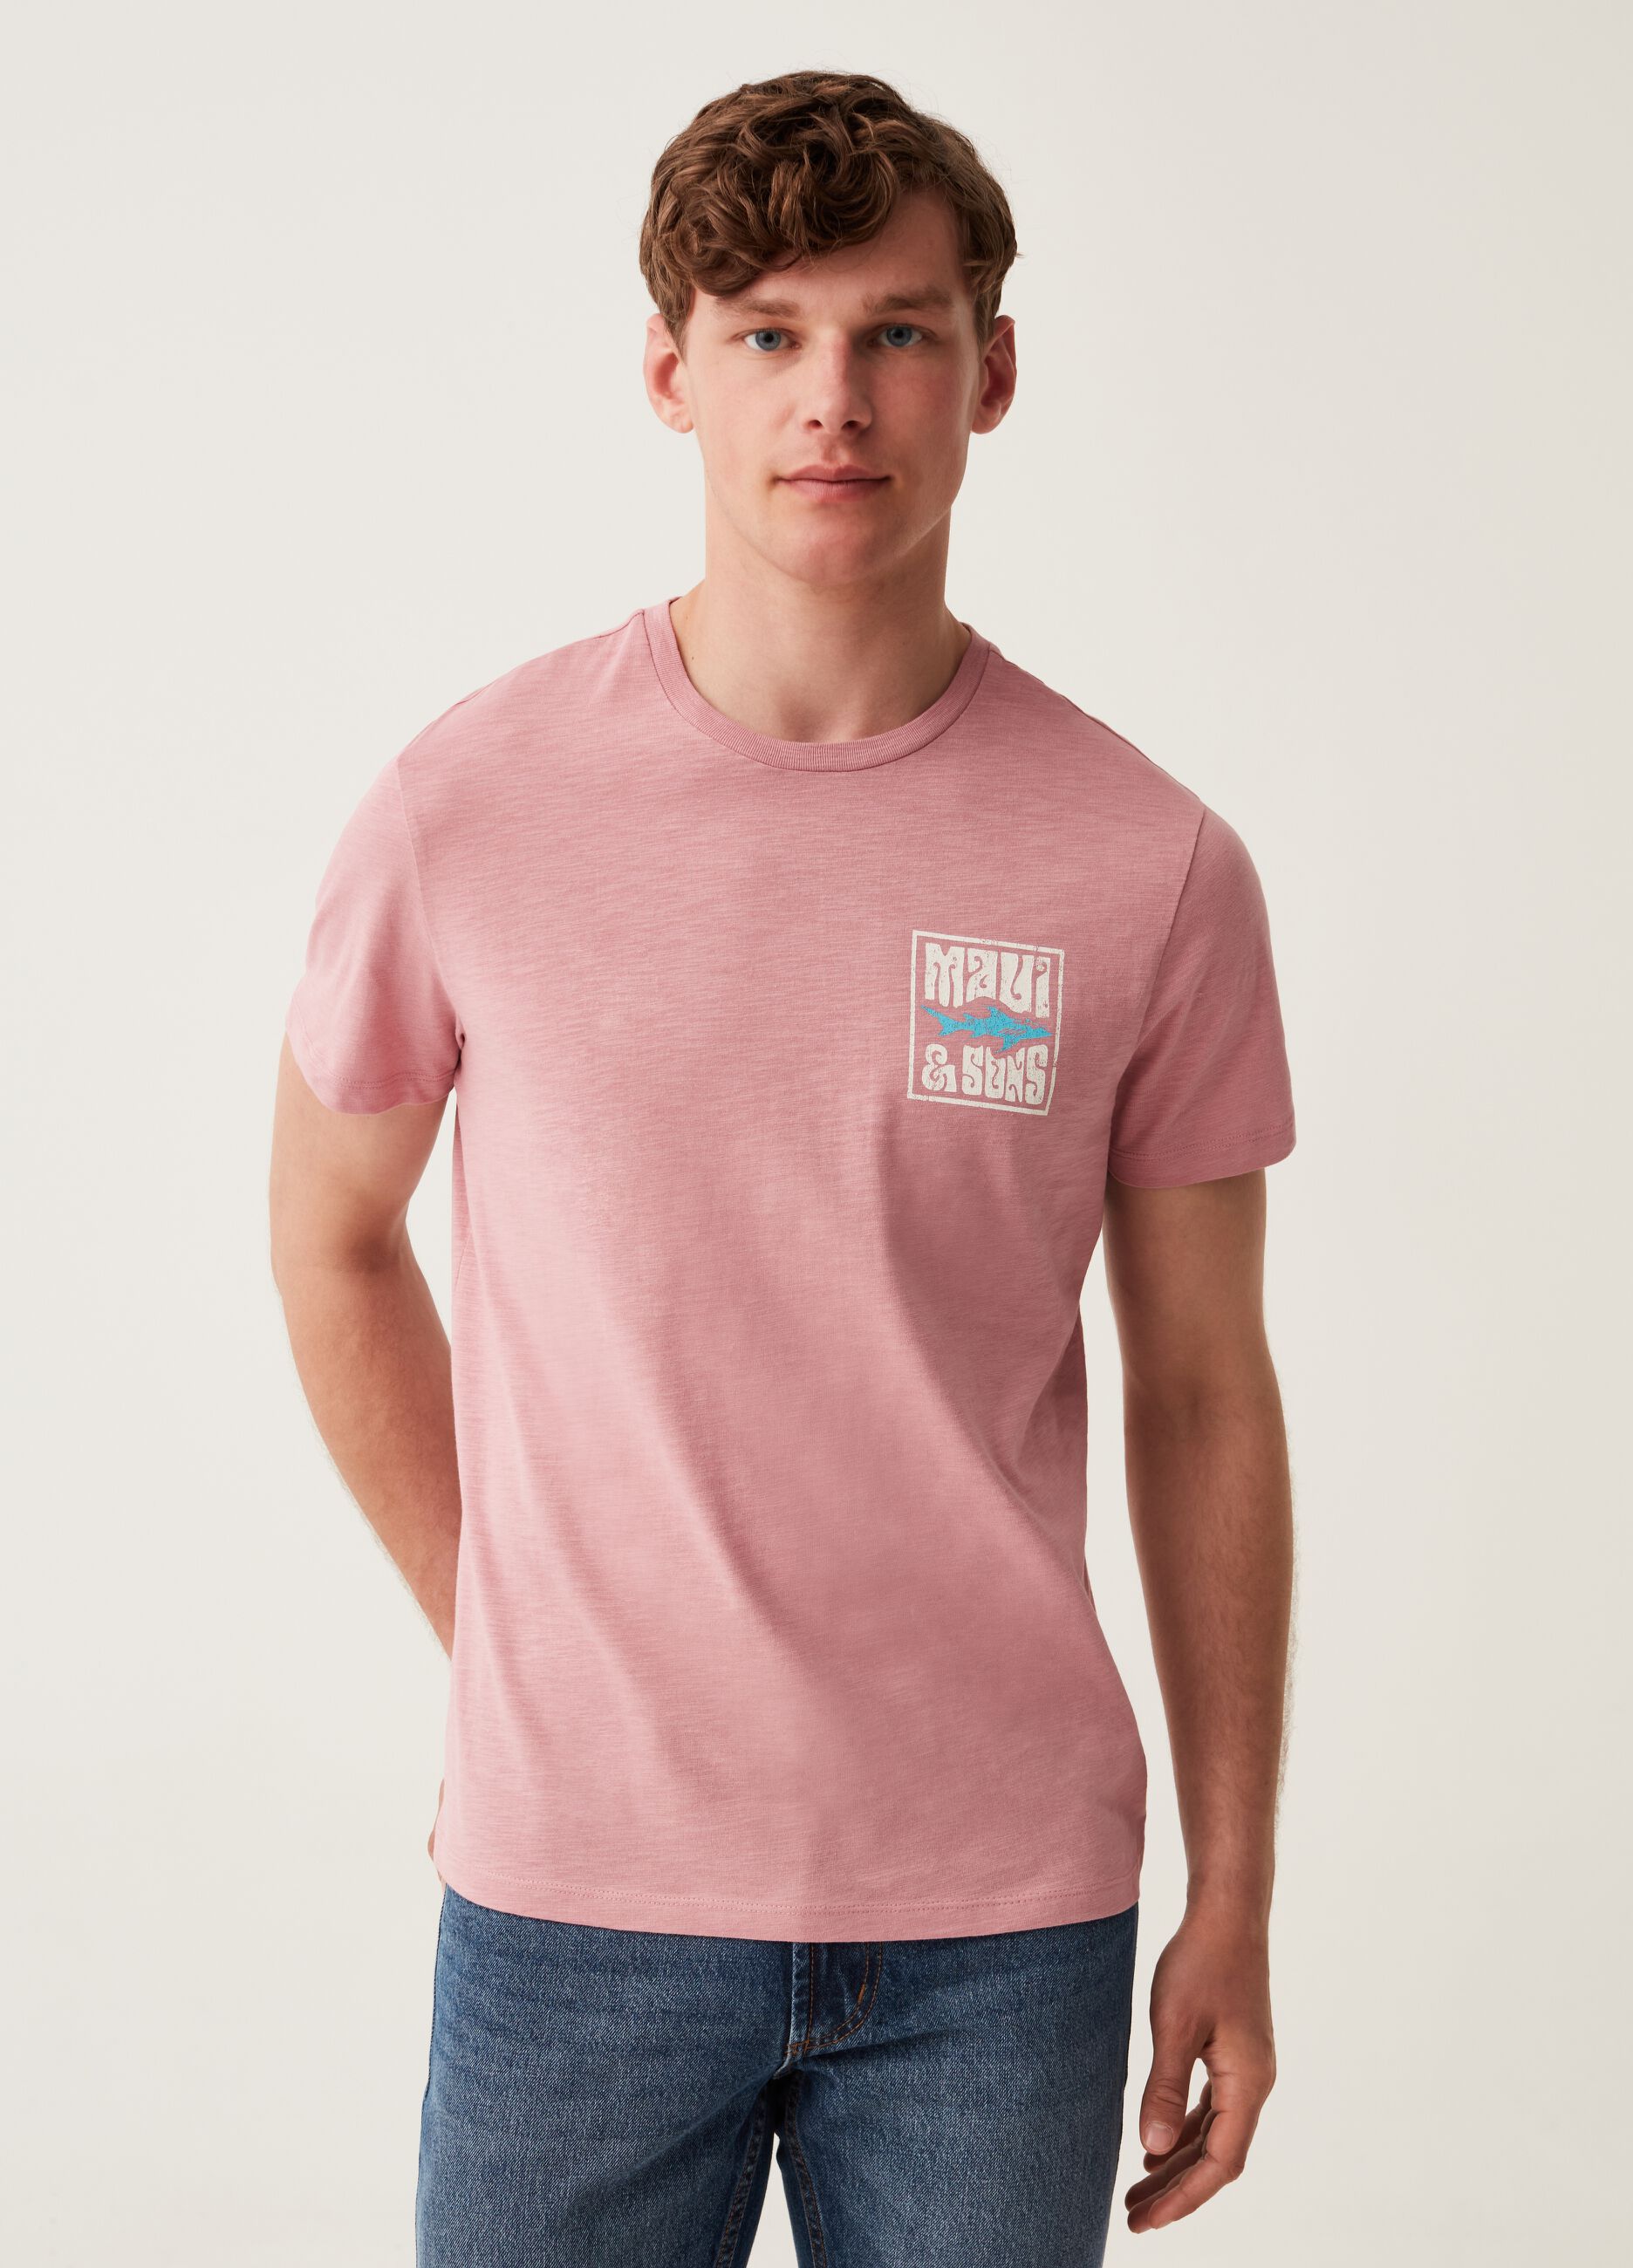 Slub cotton T-shirt with Maui and Sons print